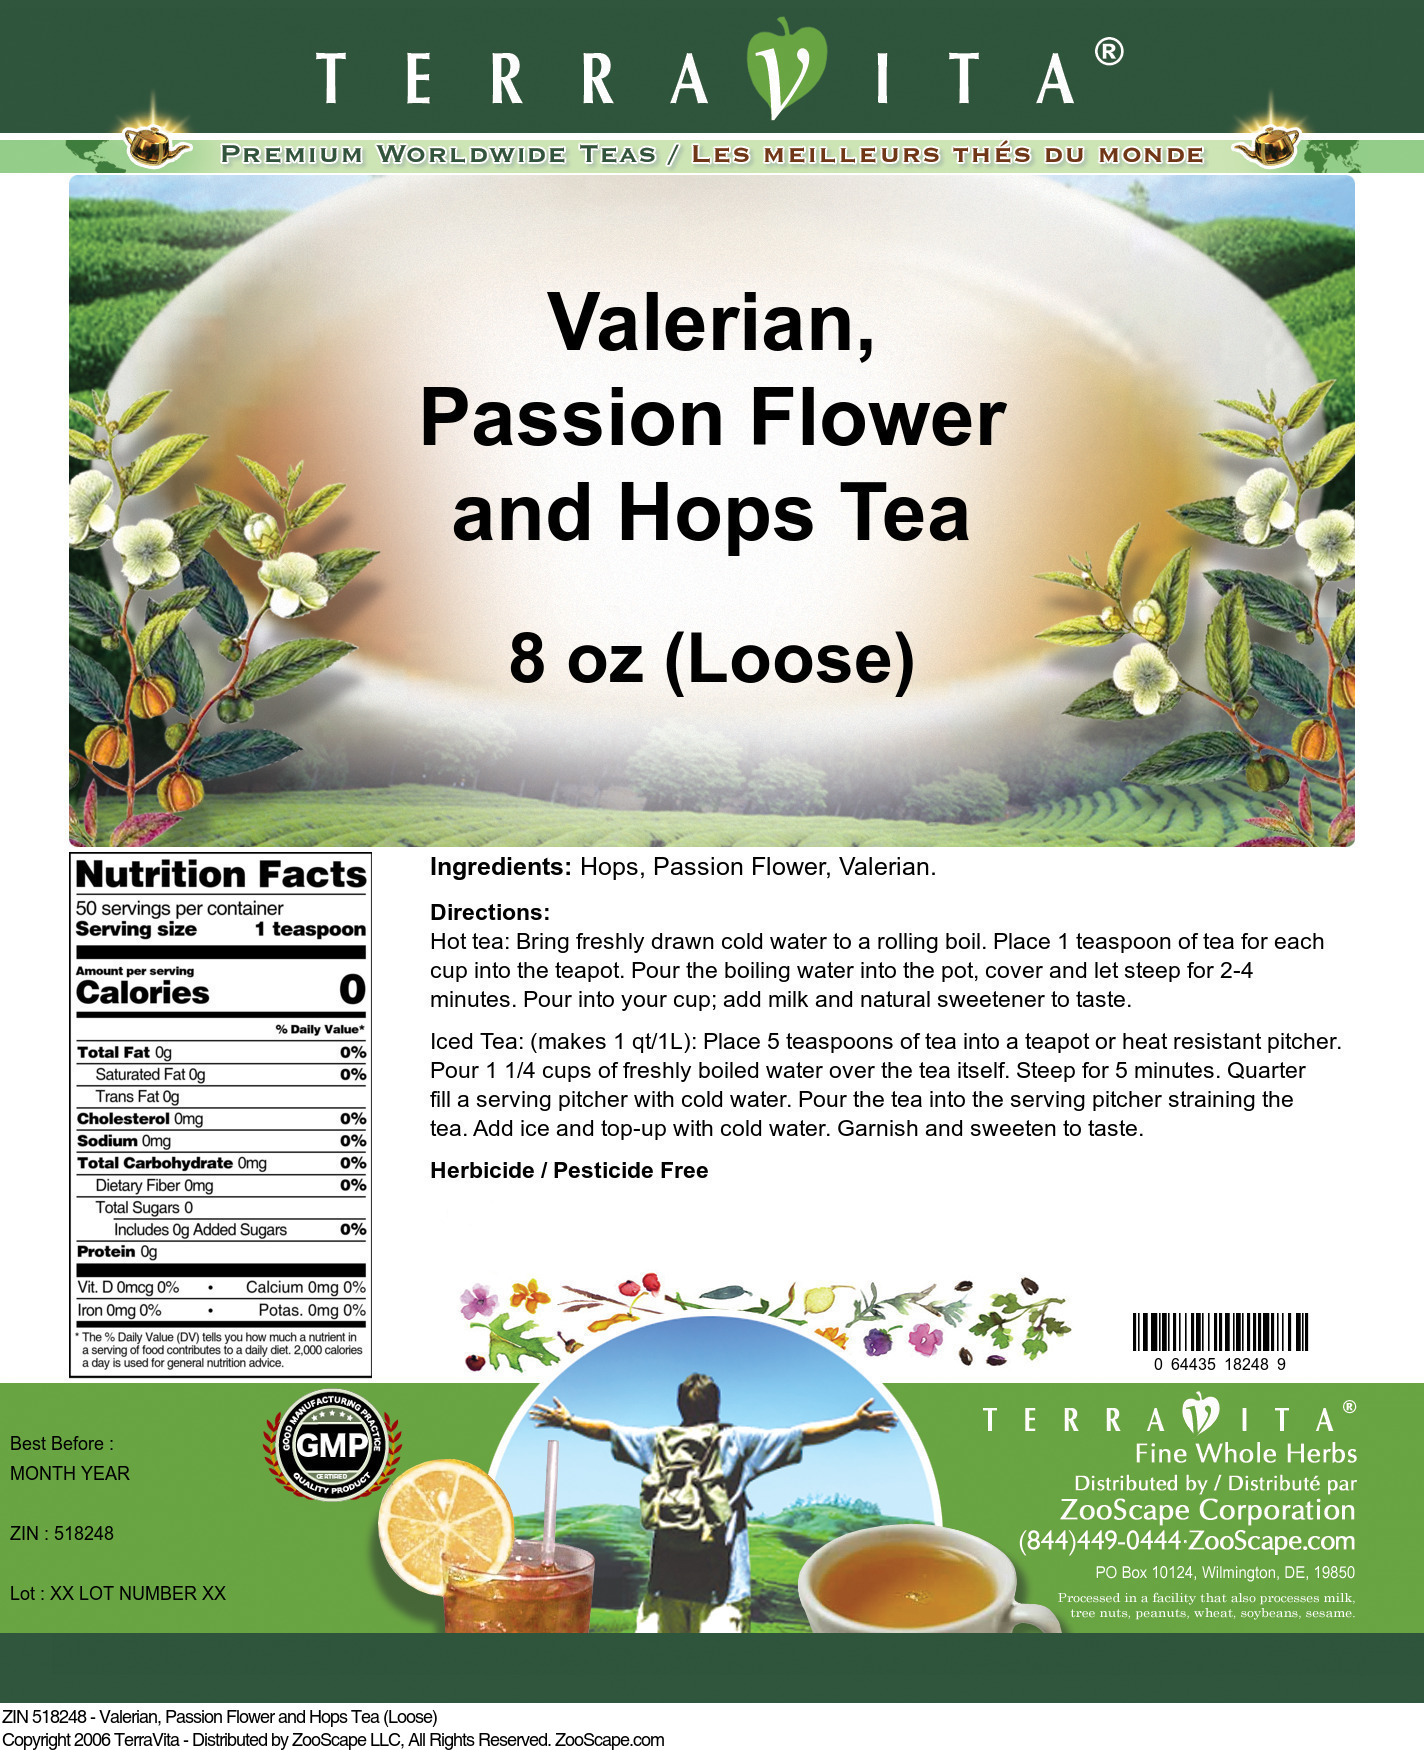 Valerian, Passion Flower and Hops Tea (Loose) - Label